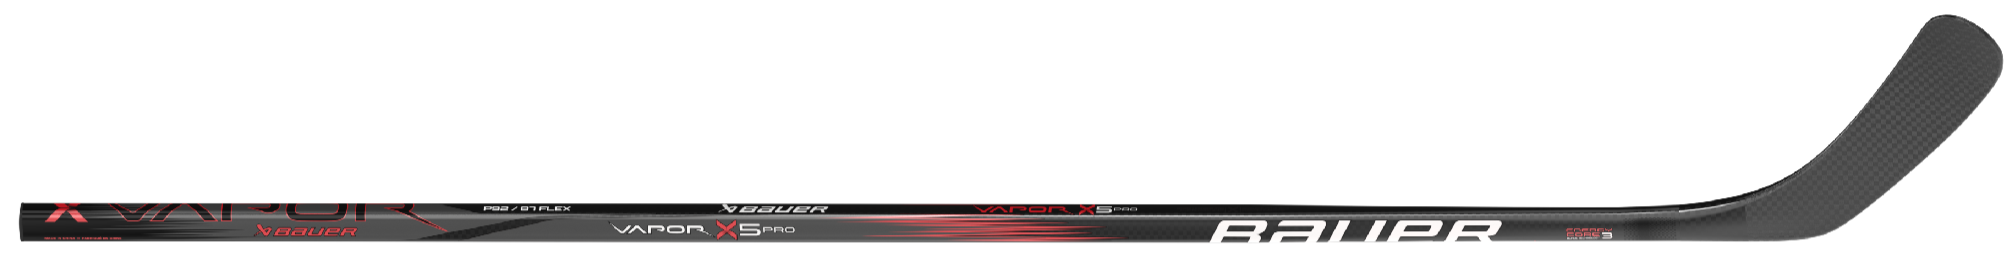 Bauer Vapor X5 Pro Bâtons de Hockey Senior